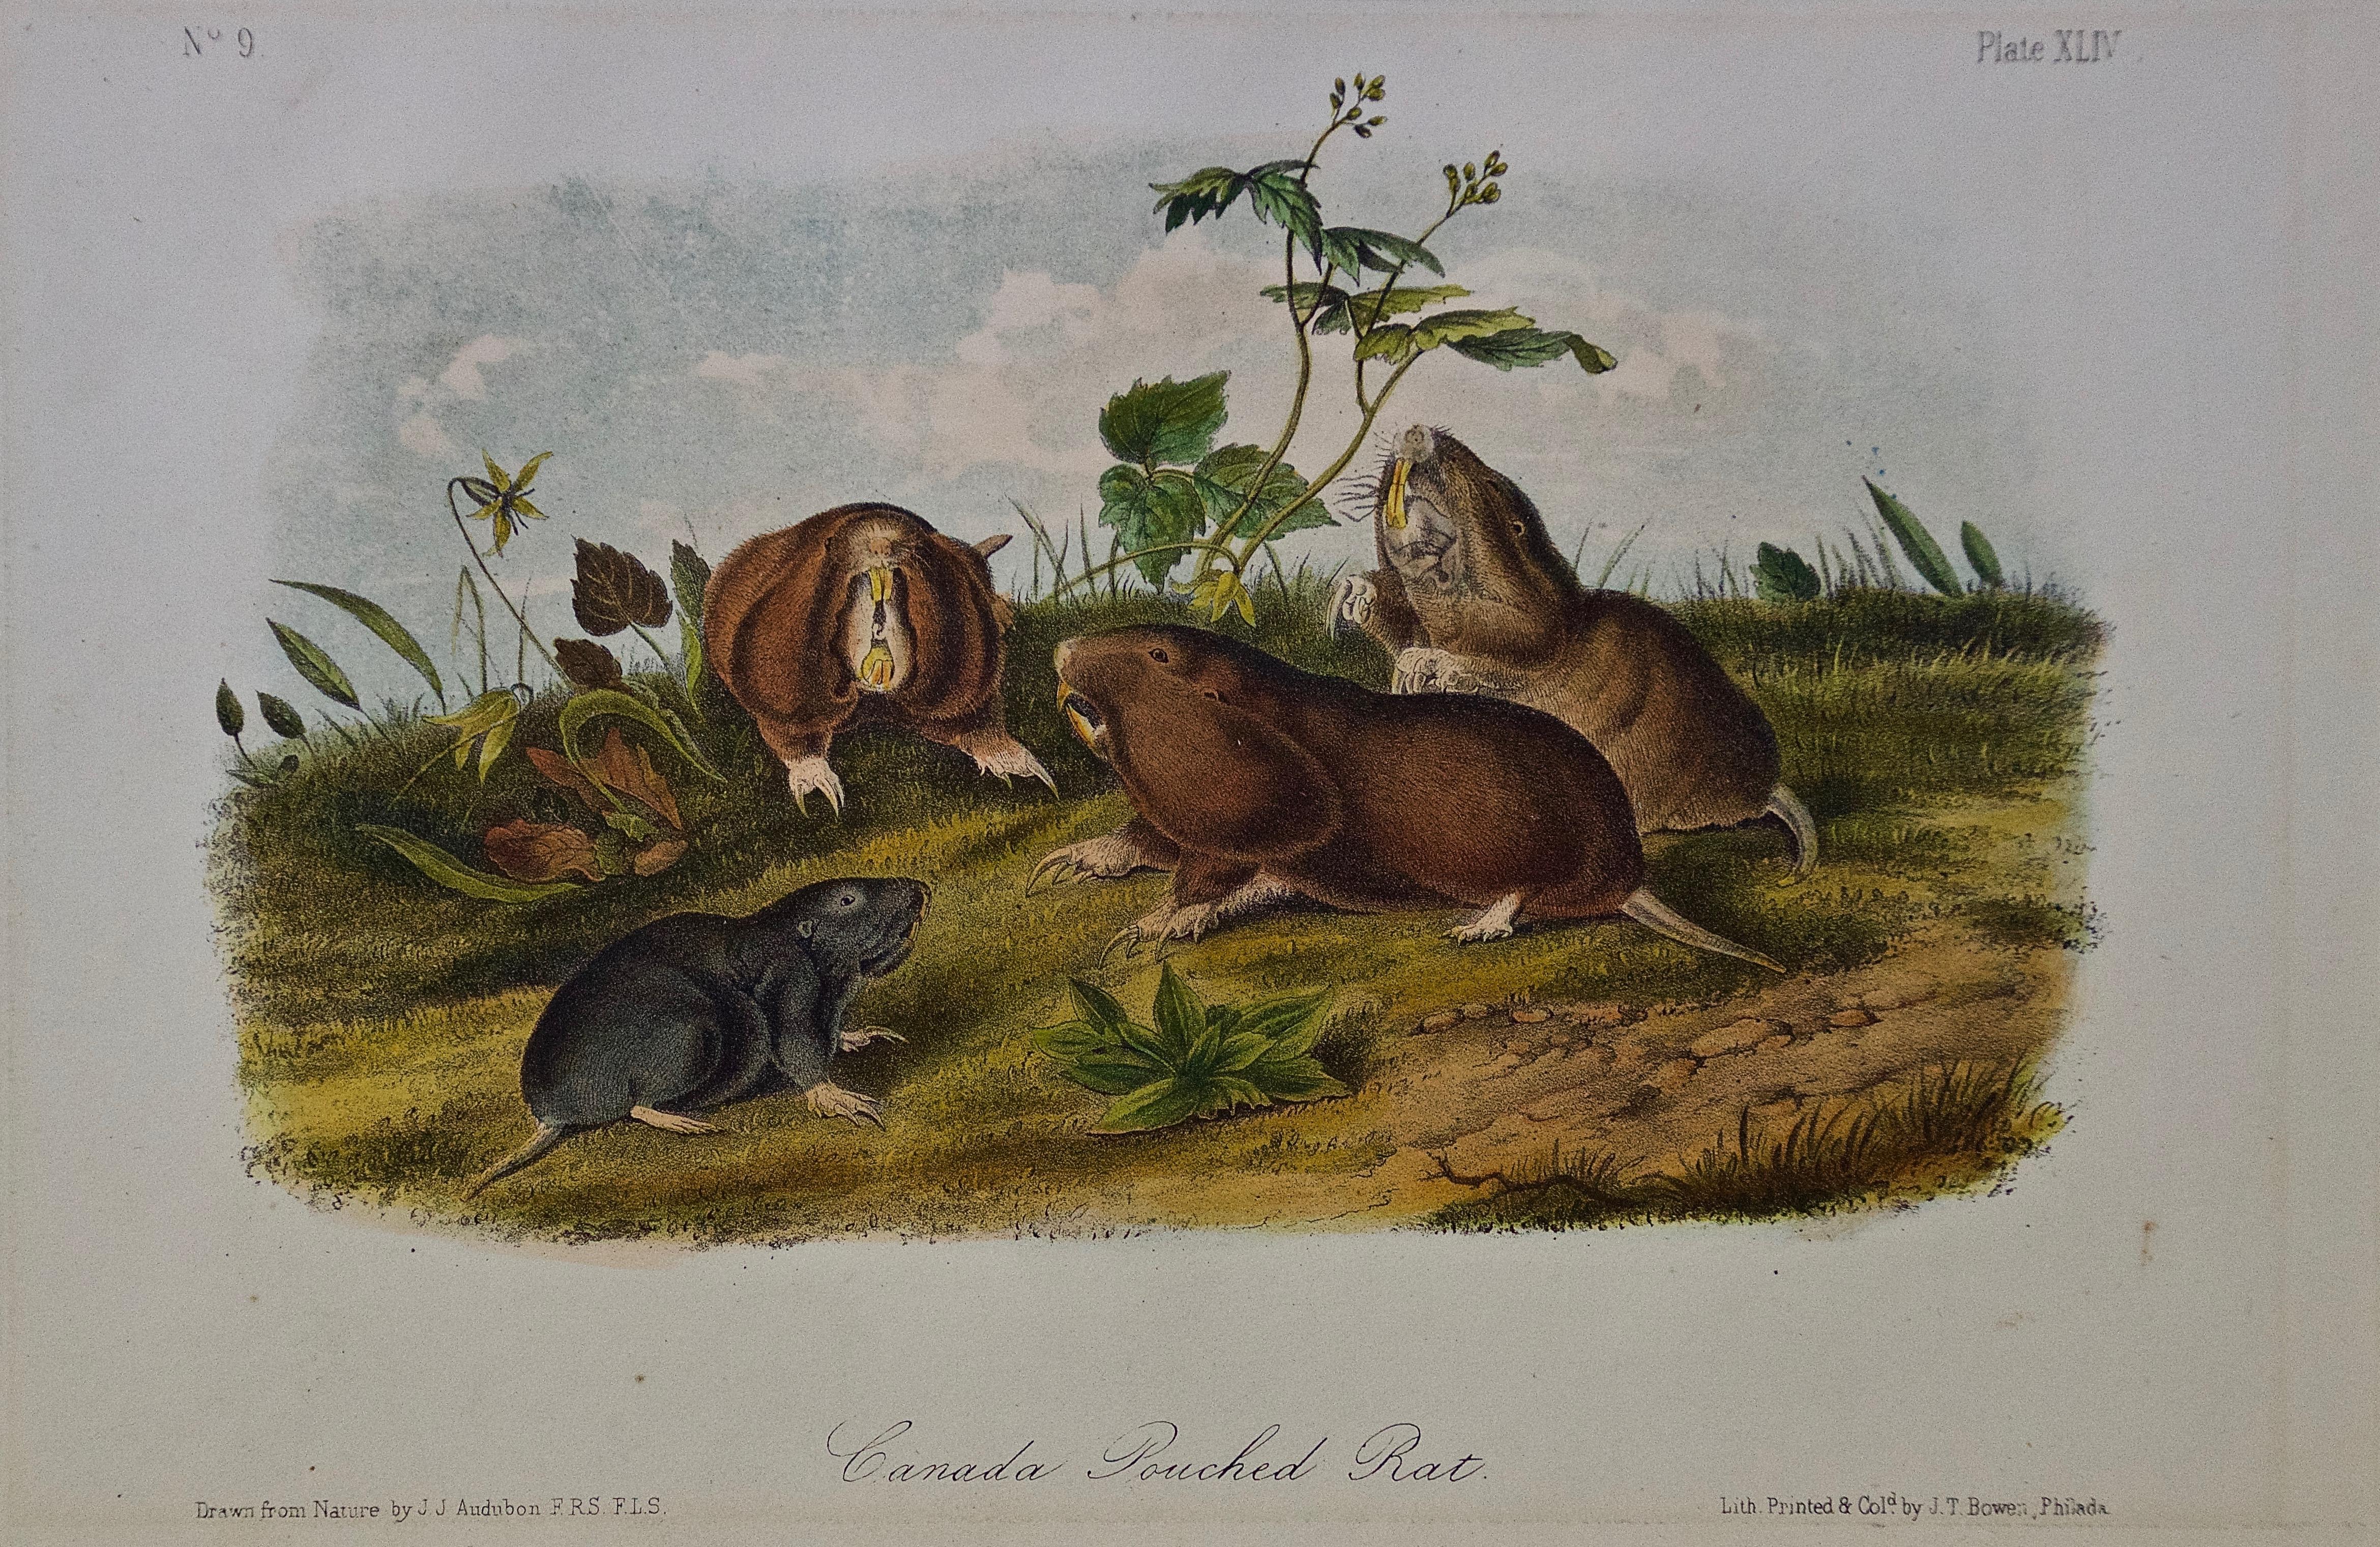 John James Audubon Animal Print - Original Audubon Hand Colored Lithograph of a "Canada Pouched Rat"